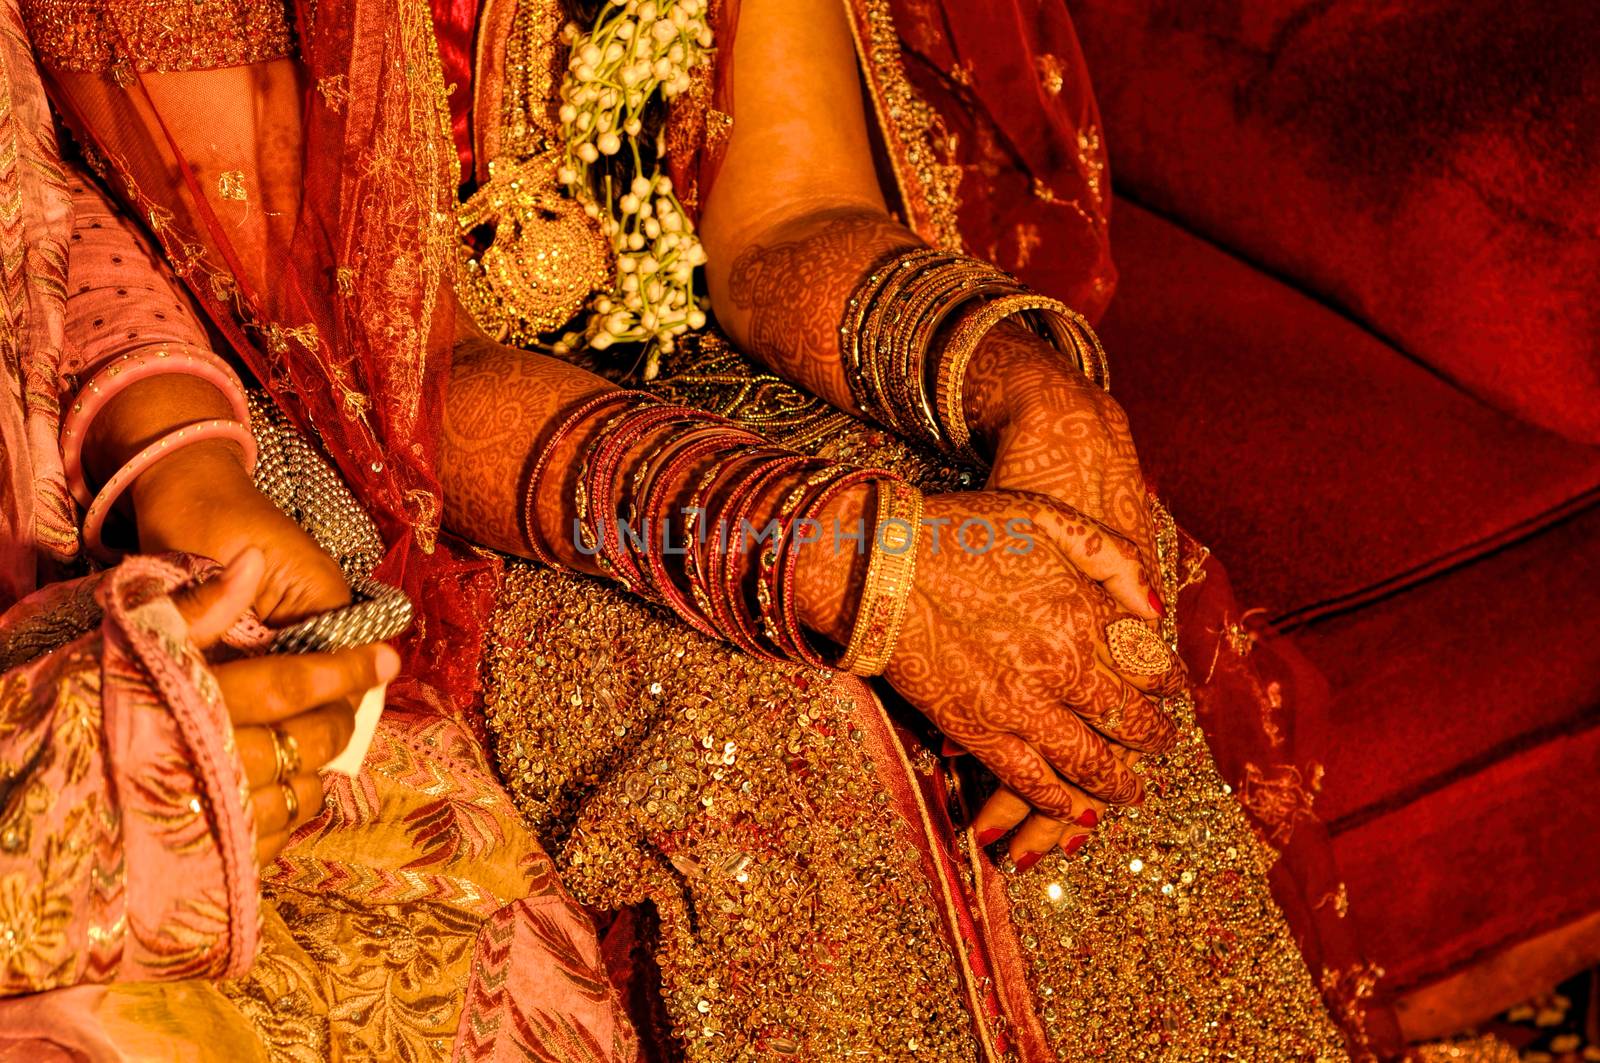 Henna on brides hands by MichalKnitl